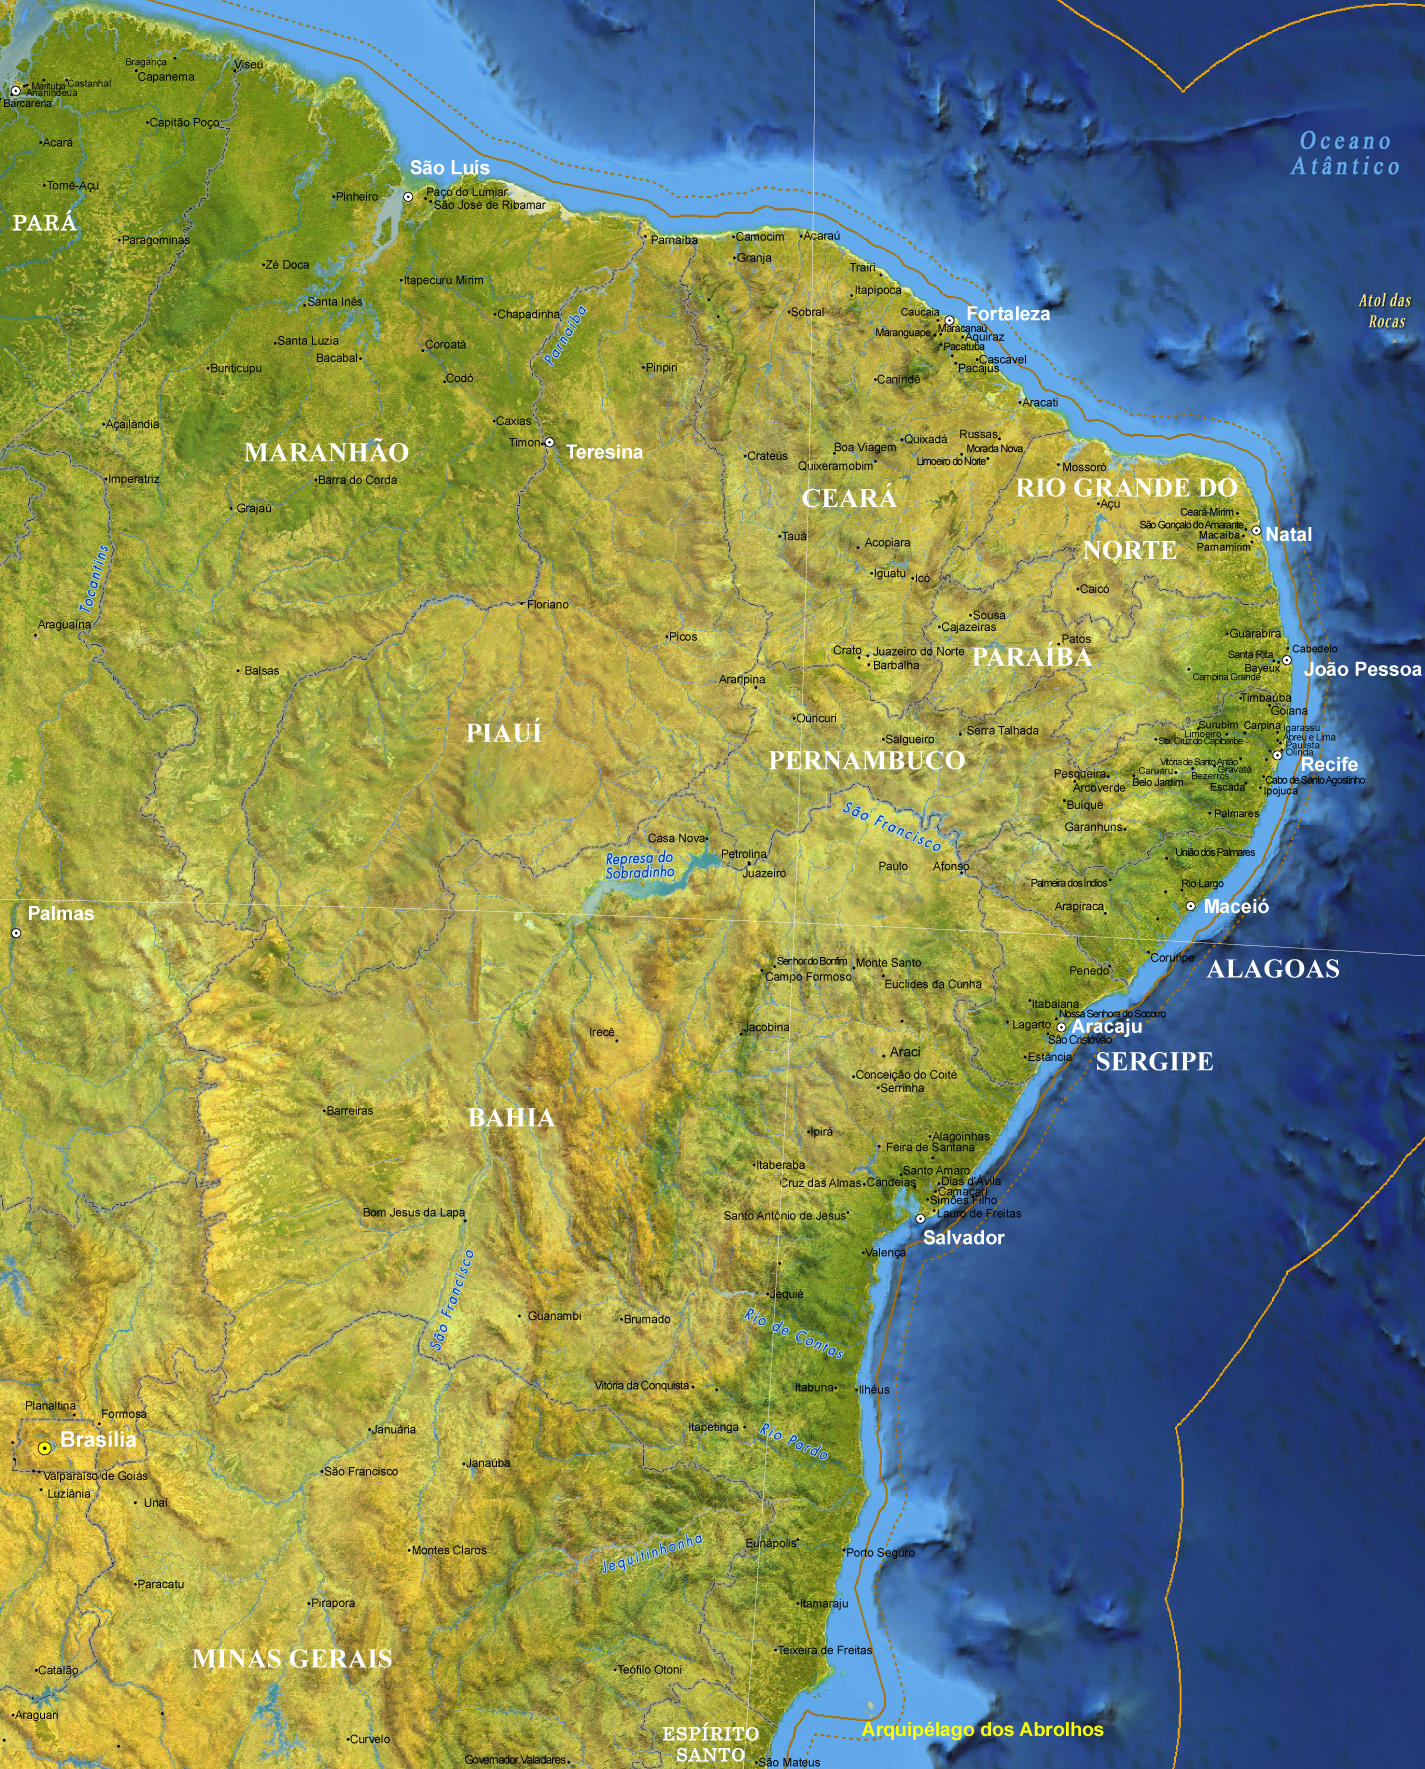 Oito cidades concentram 25% das riquezas do Brasil, afirma IBGE